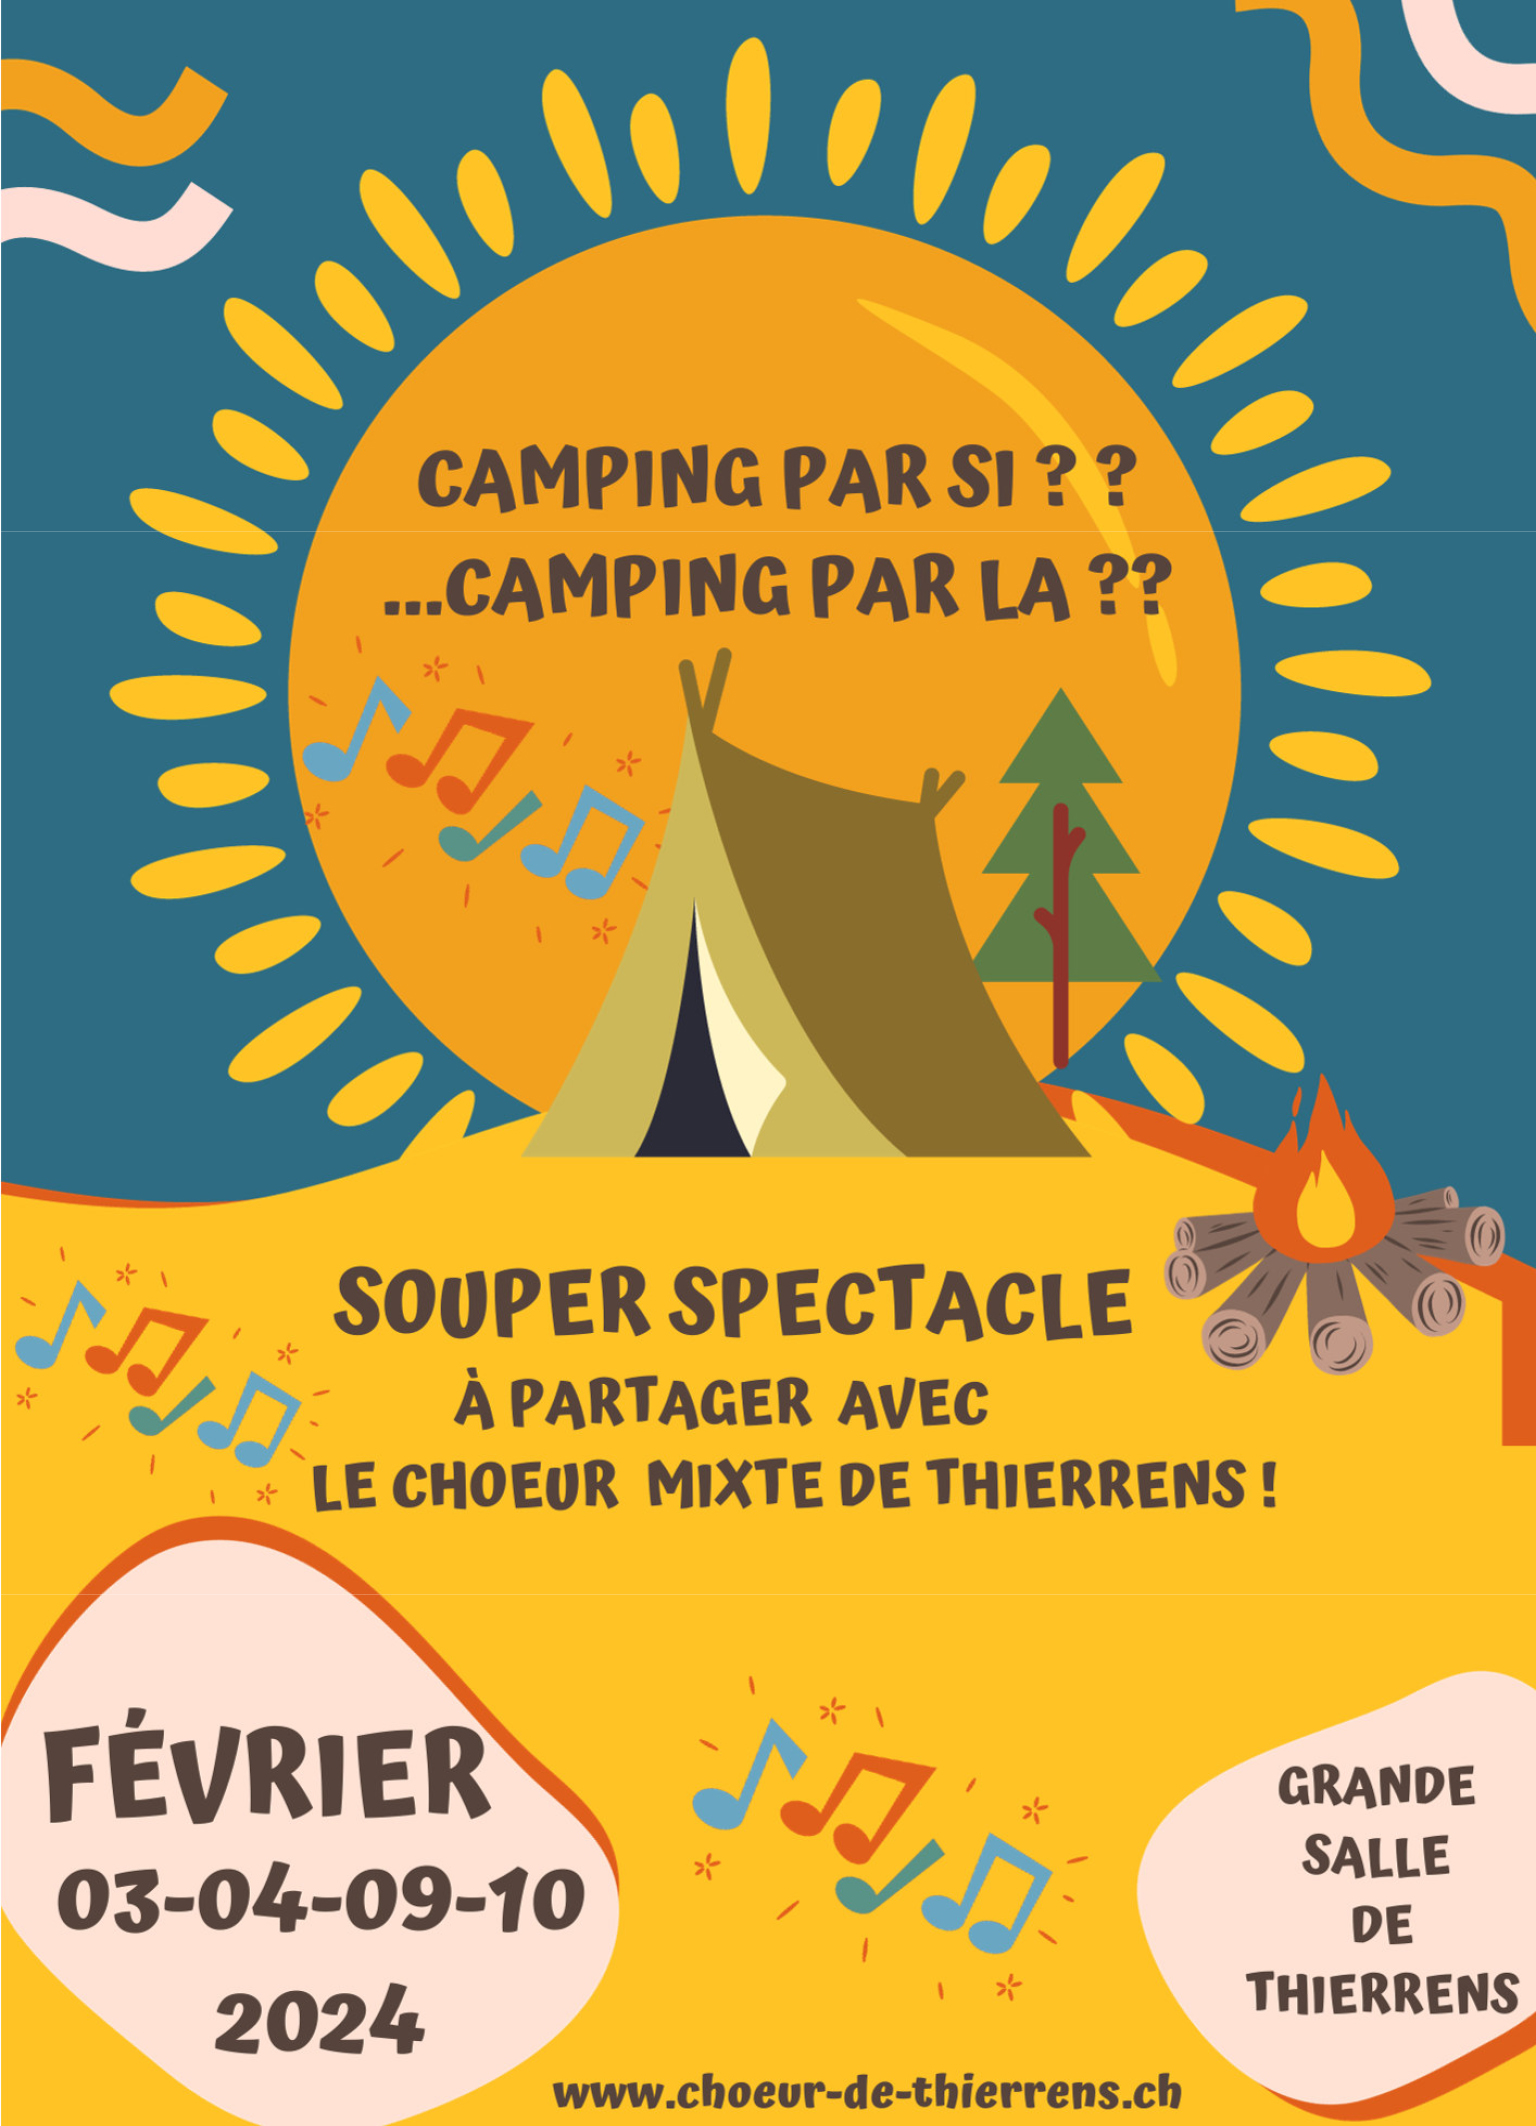 Camping, flyer 2 - recto